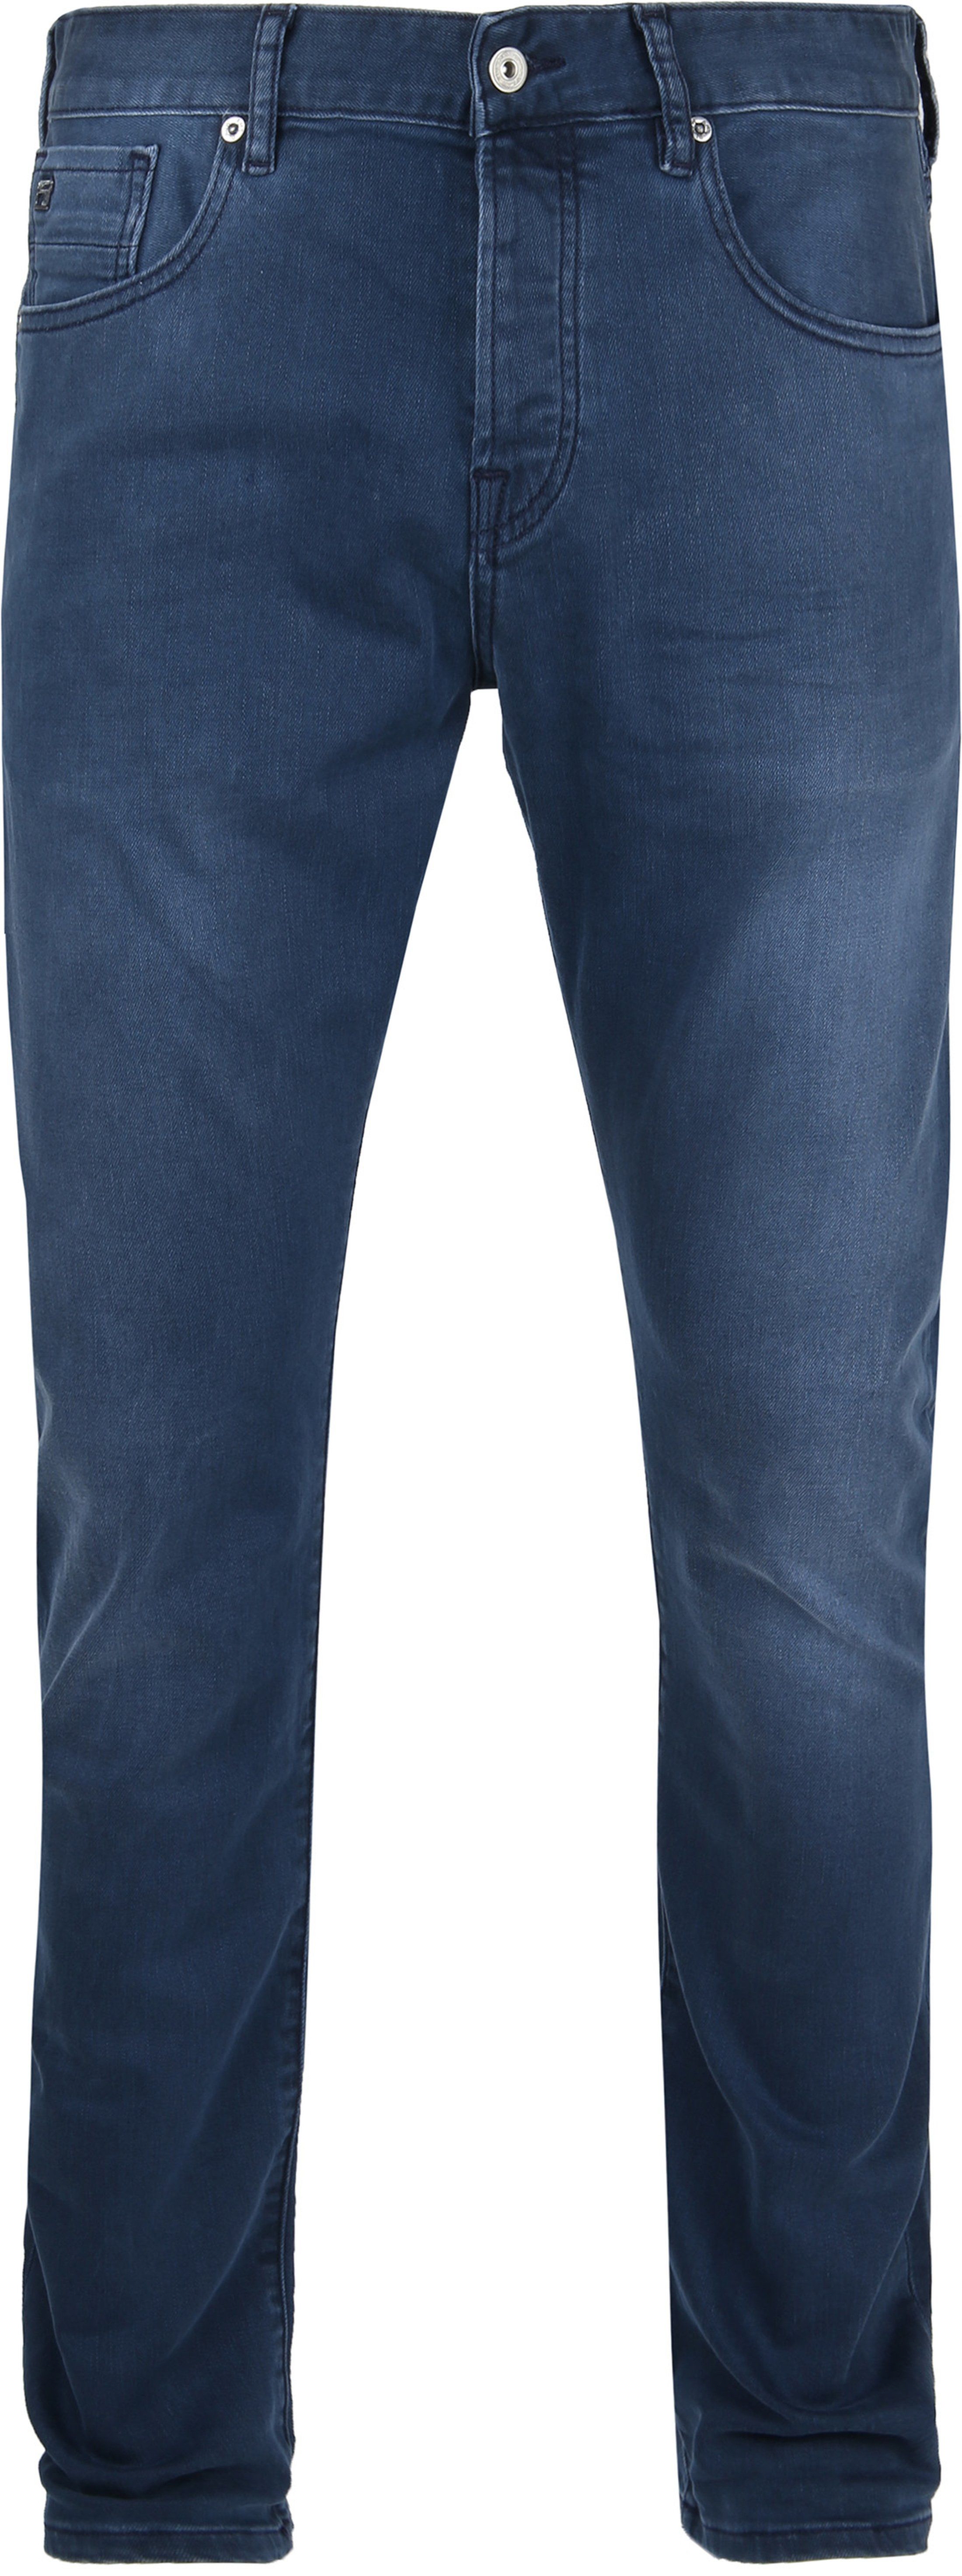 Scotch and Soda Ralston Jeans Concrete Blue size W 29